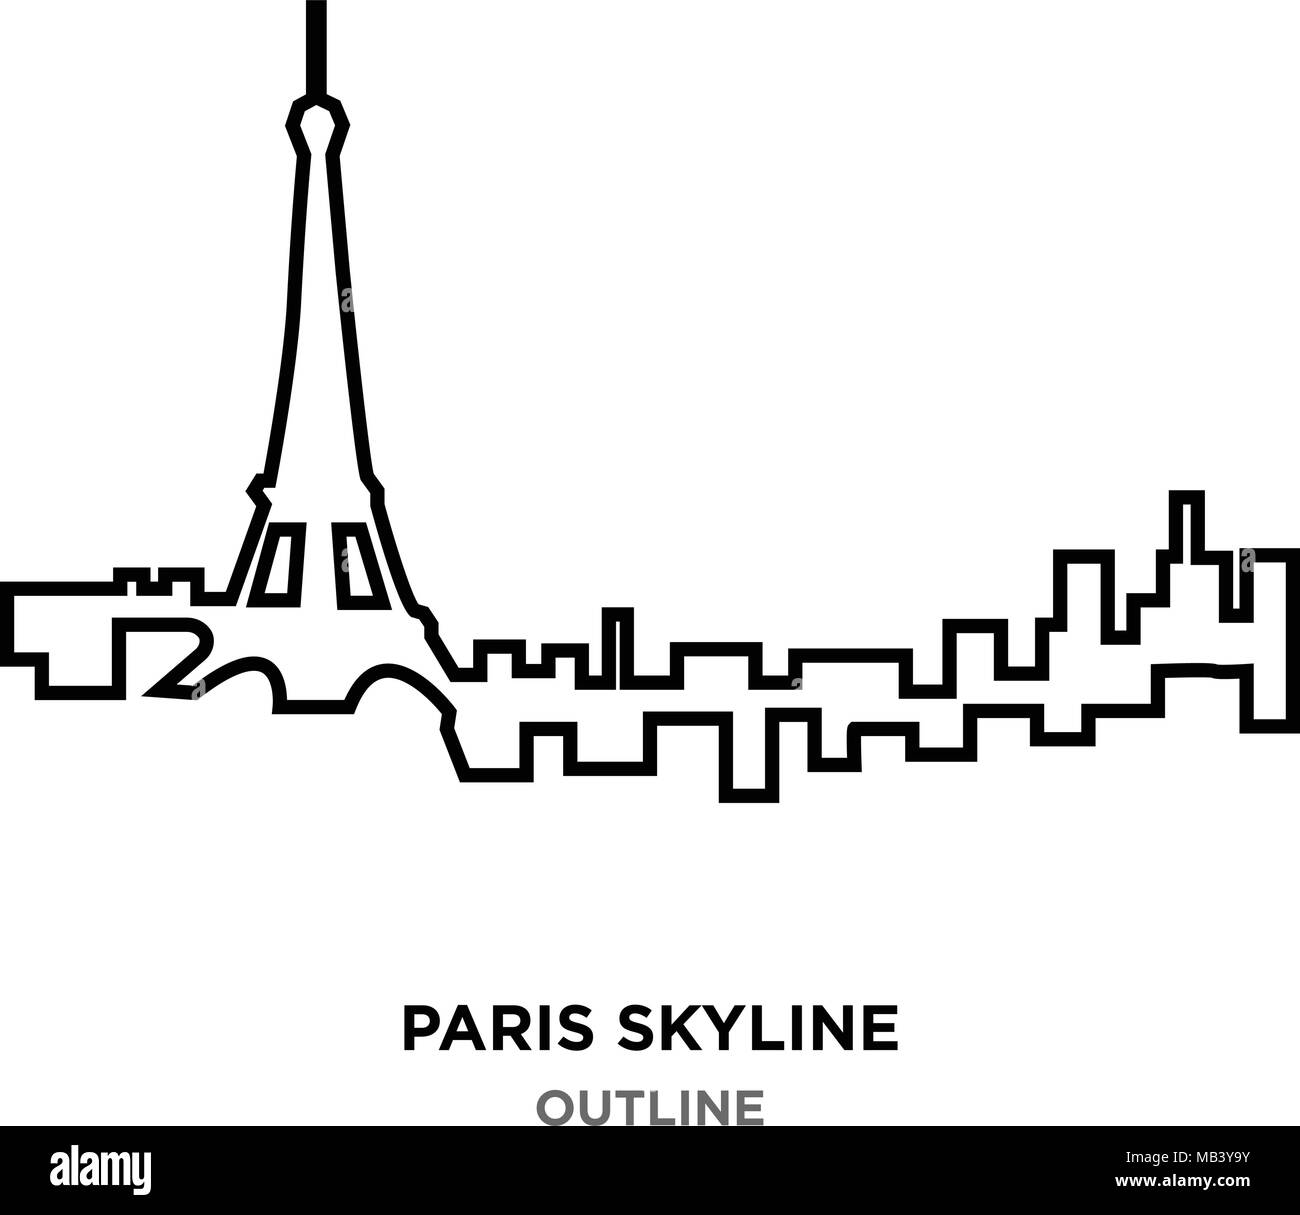 paris skyline outline on white background Stock Vector